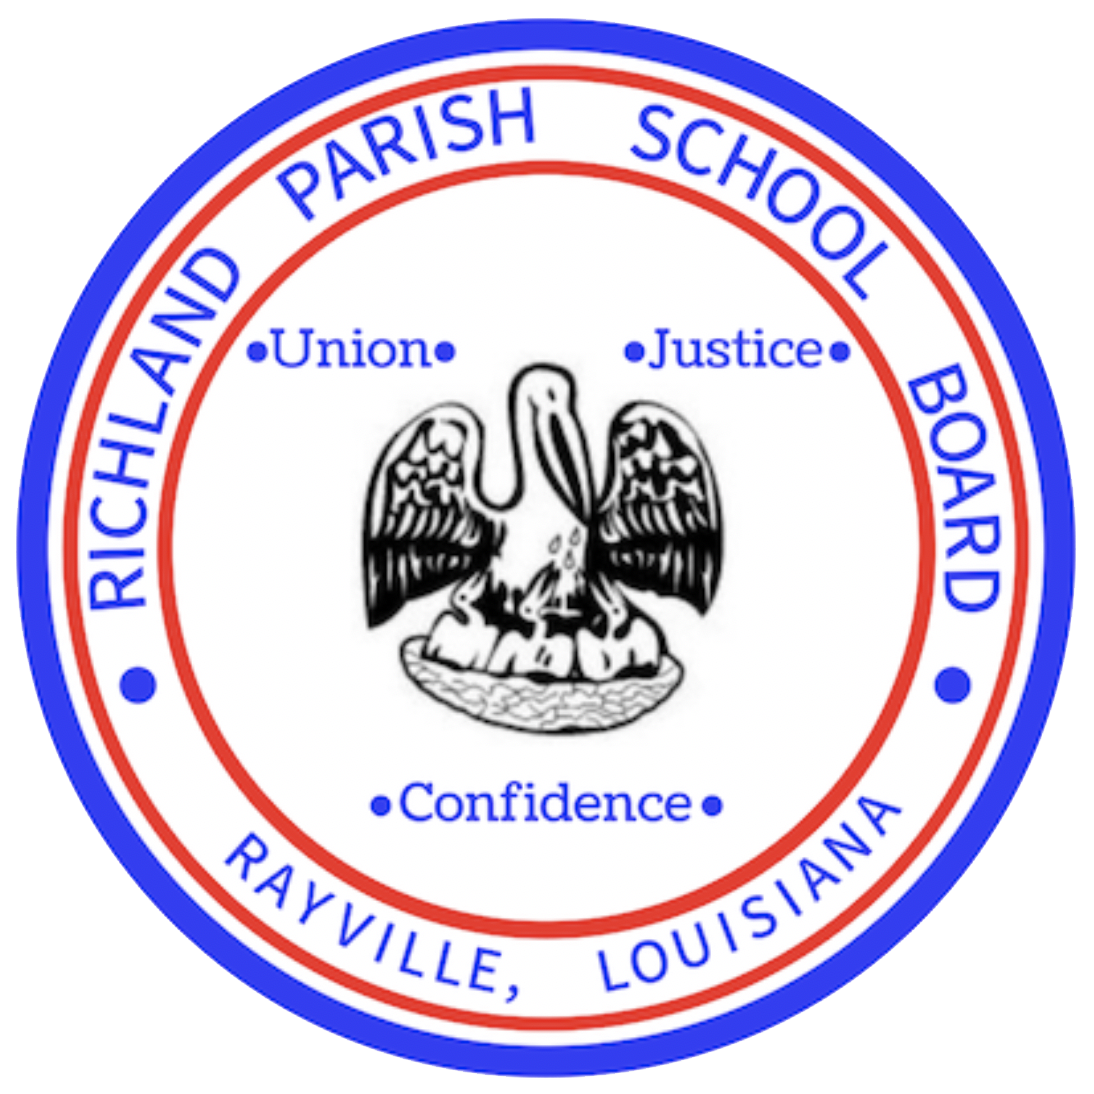 Richland Parish School Board